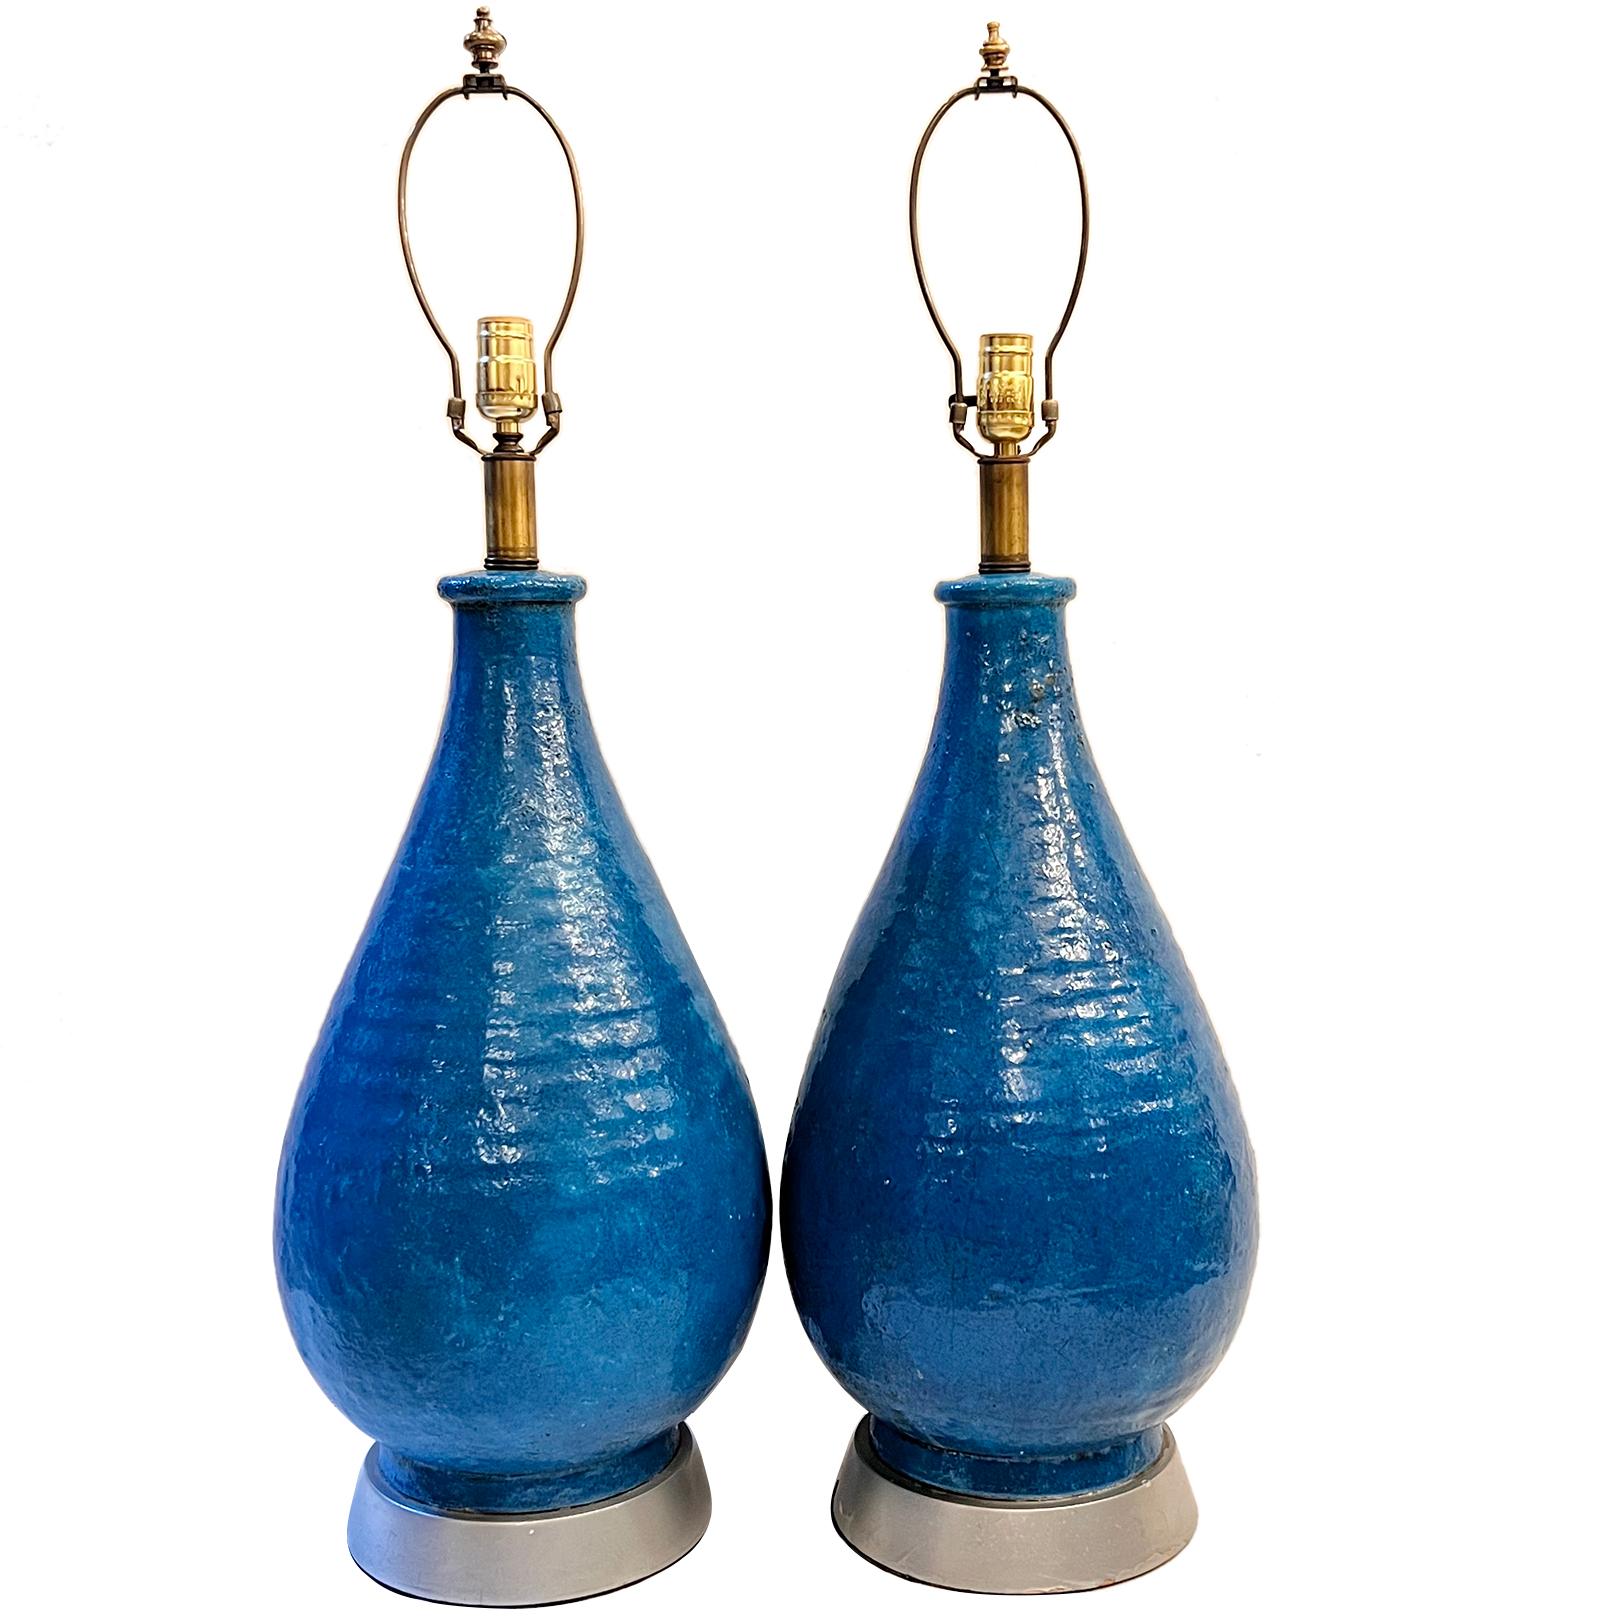 Pair of Midcentury Blue Ceramic Table Lamps